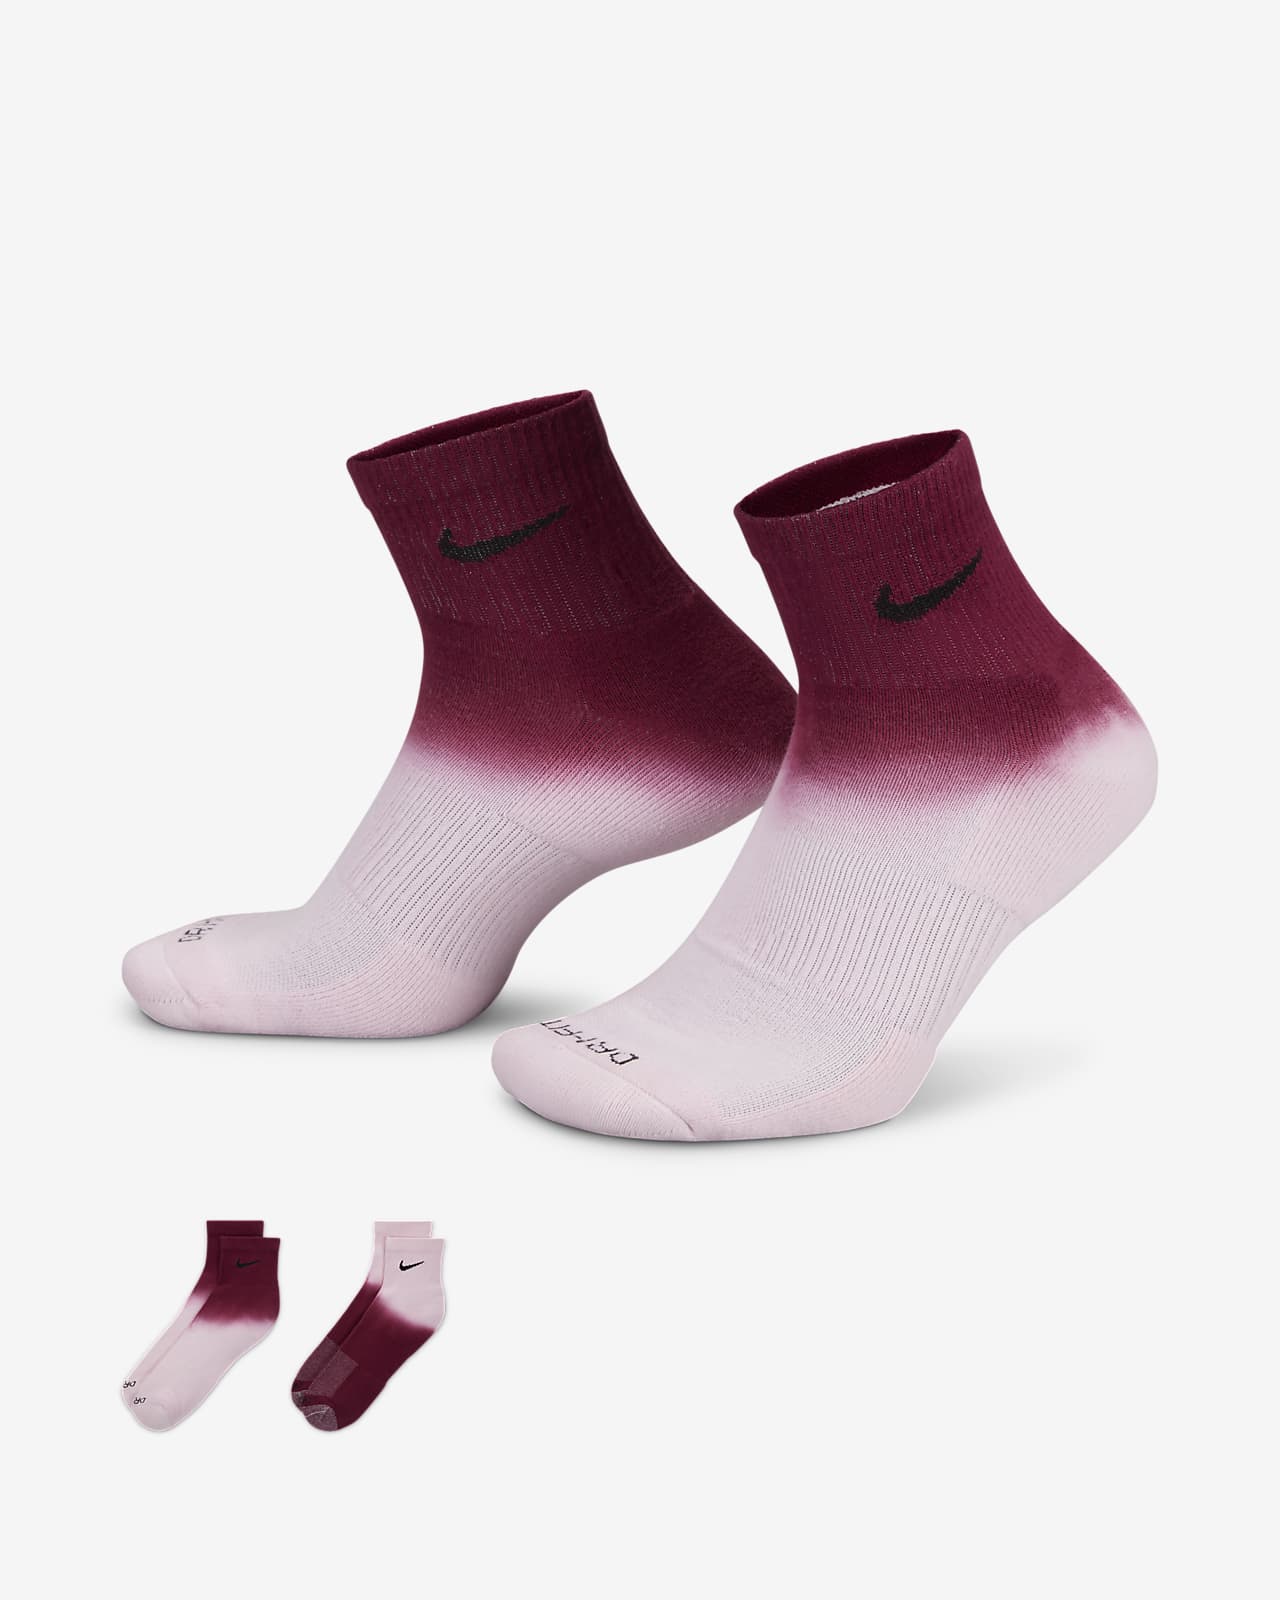 Everyday Plus ankle socks Set of 6, Nike, Shop Women's Socks Online